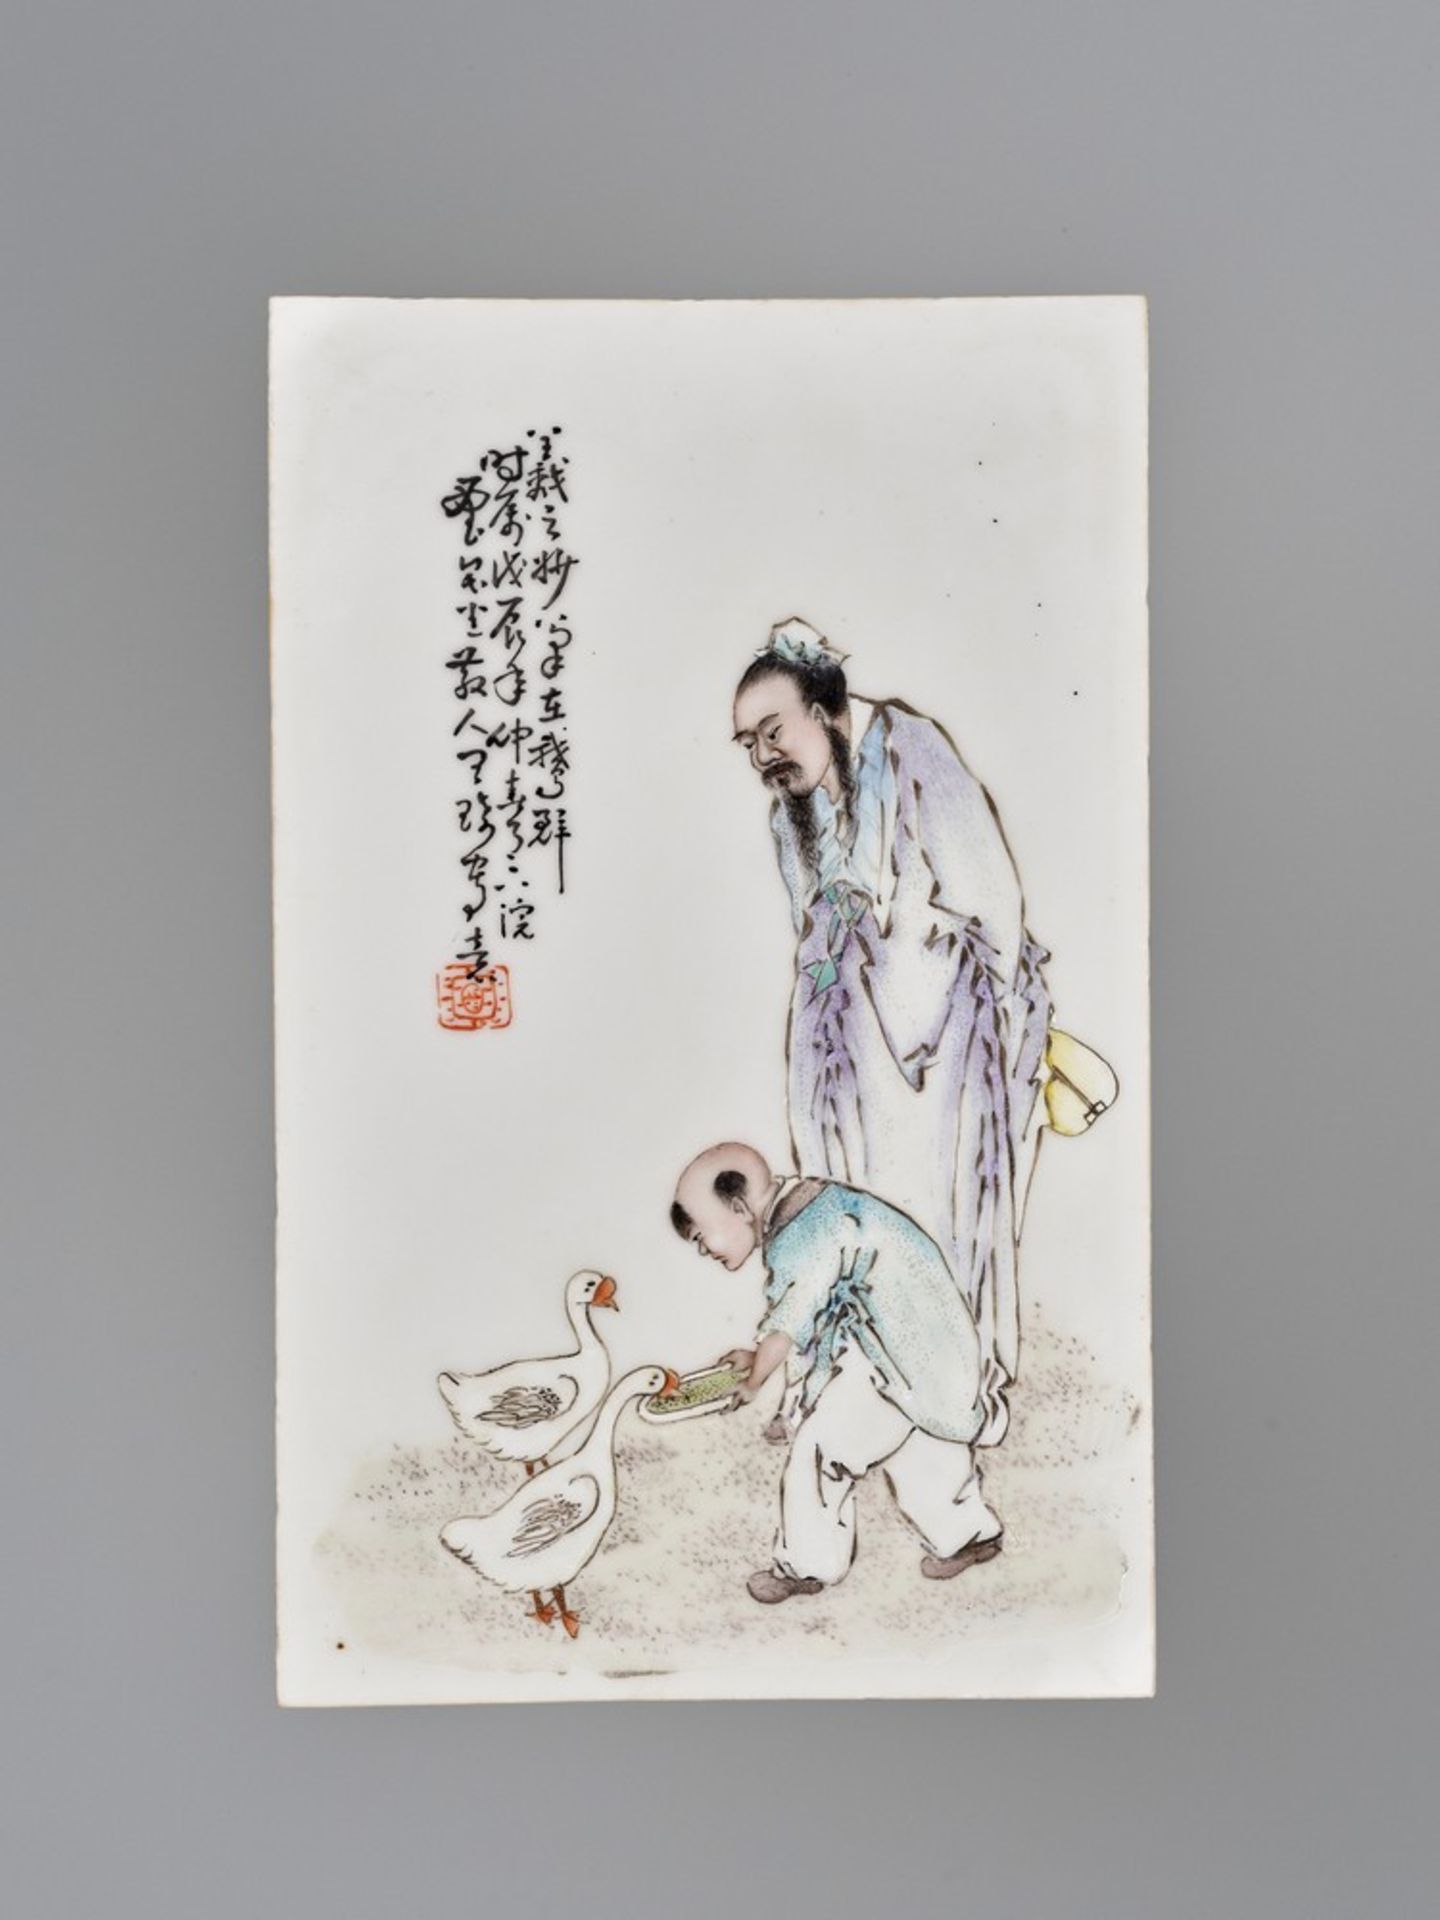 A PORCELAIN PLAQUE BY WANG QI (1884-1937)